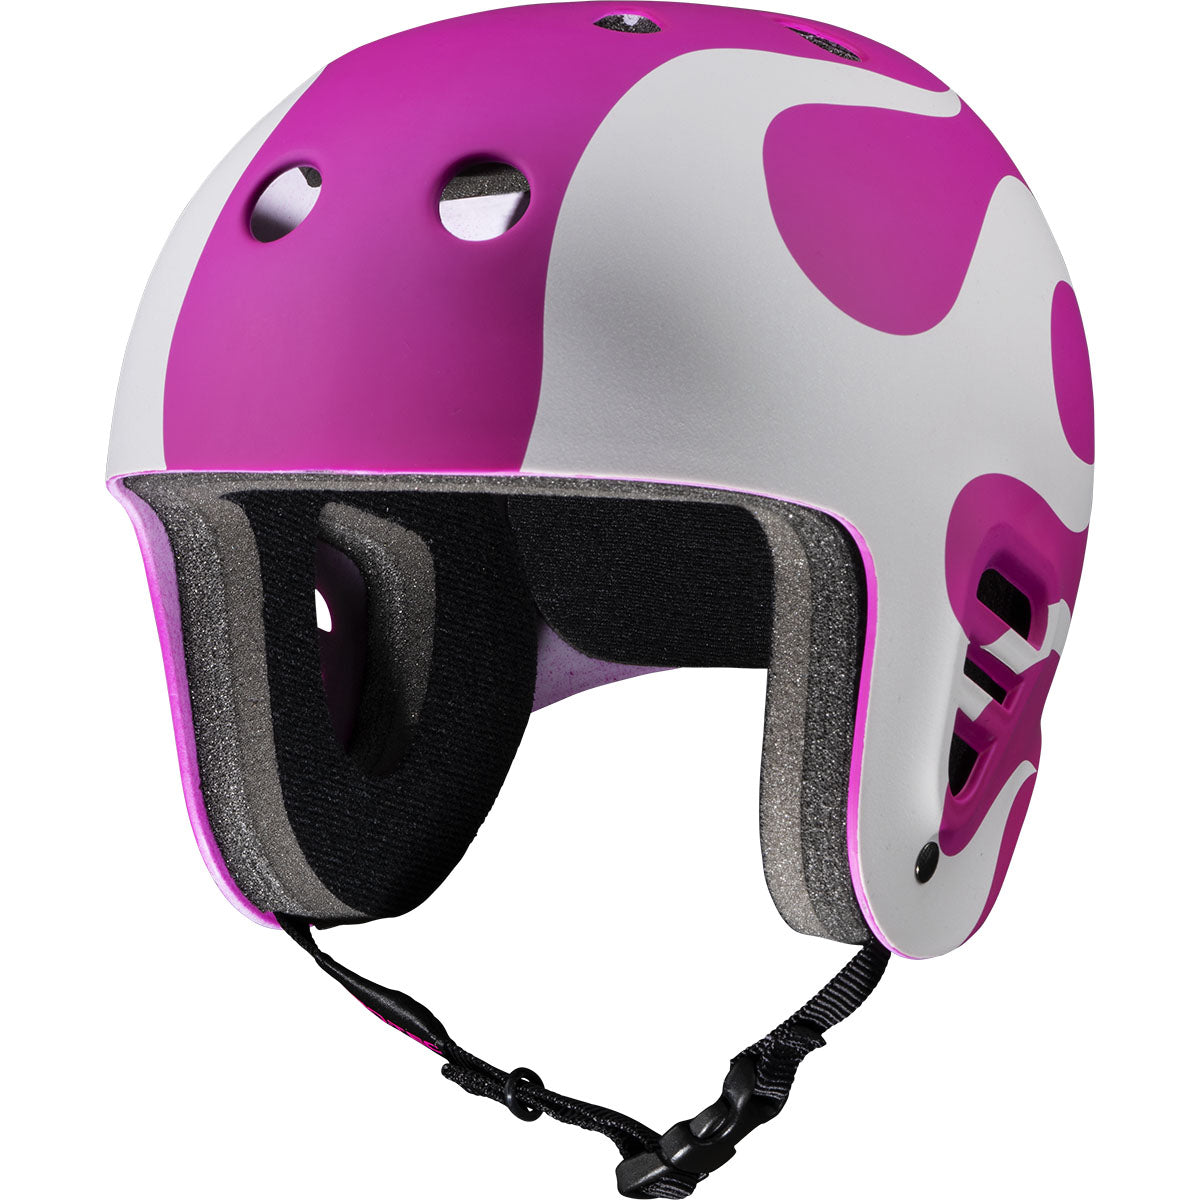 Pro-Tec Full Cut Skate Gonz Flame Helmet - Pink image 1